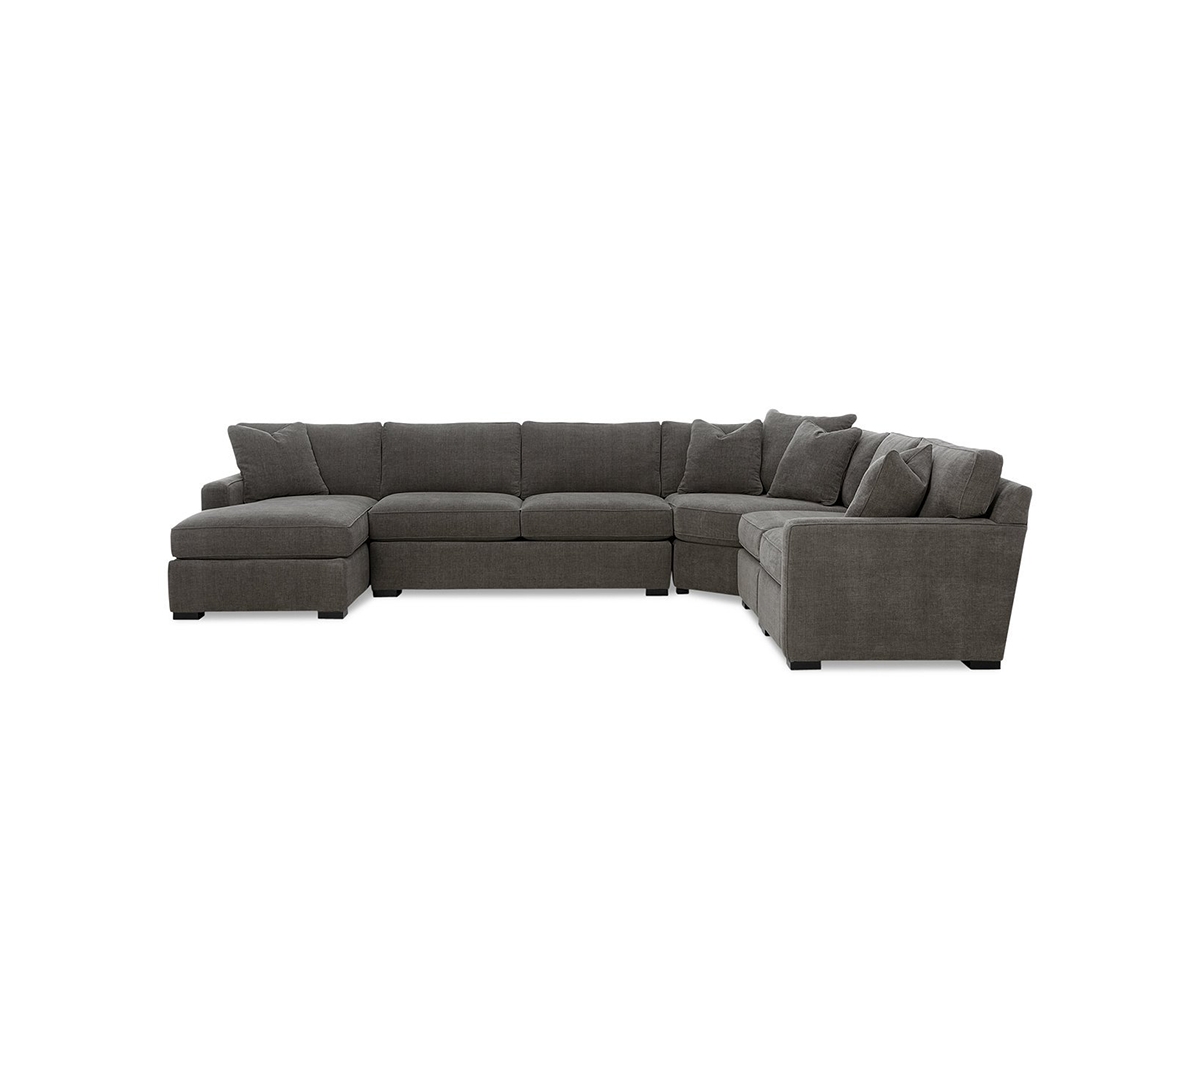 Radley 5-Piece Fabric Chaise Sectional Sofa, Created for Macys